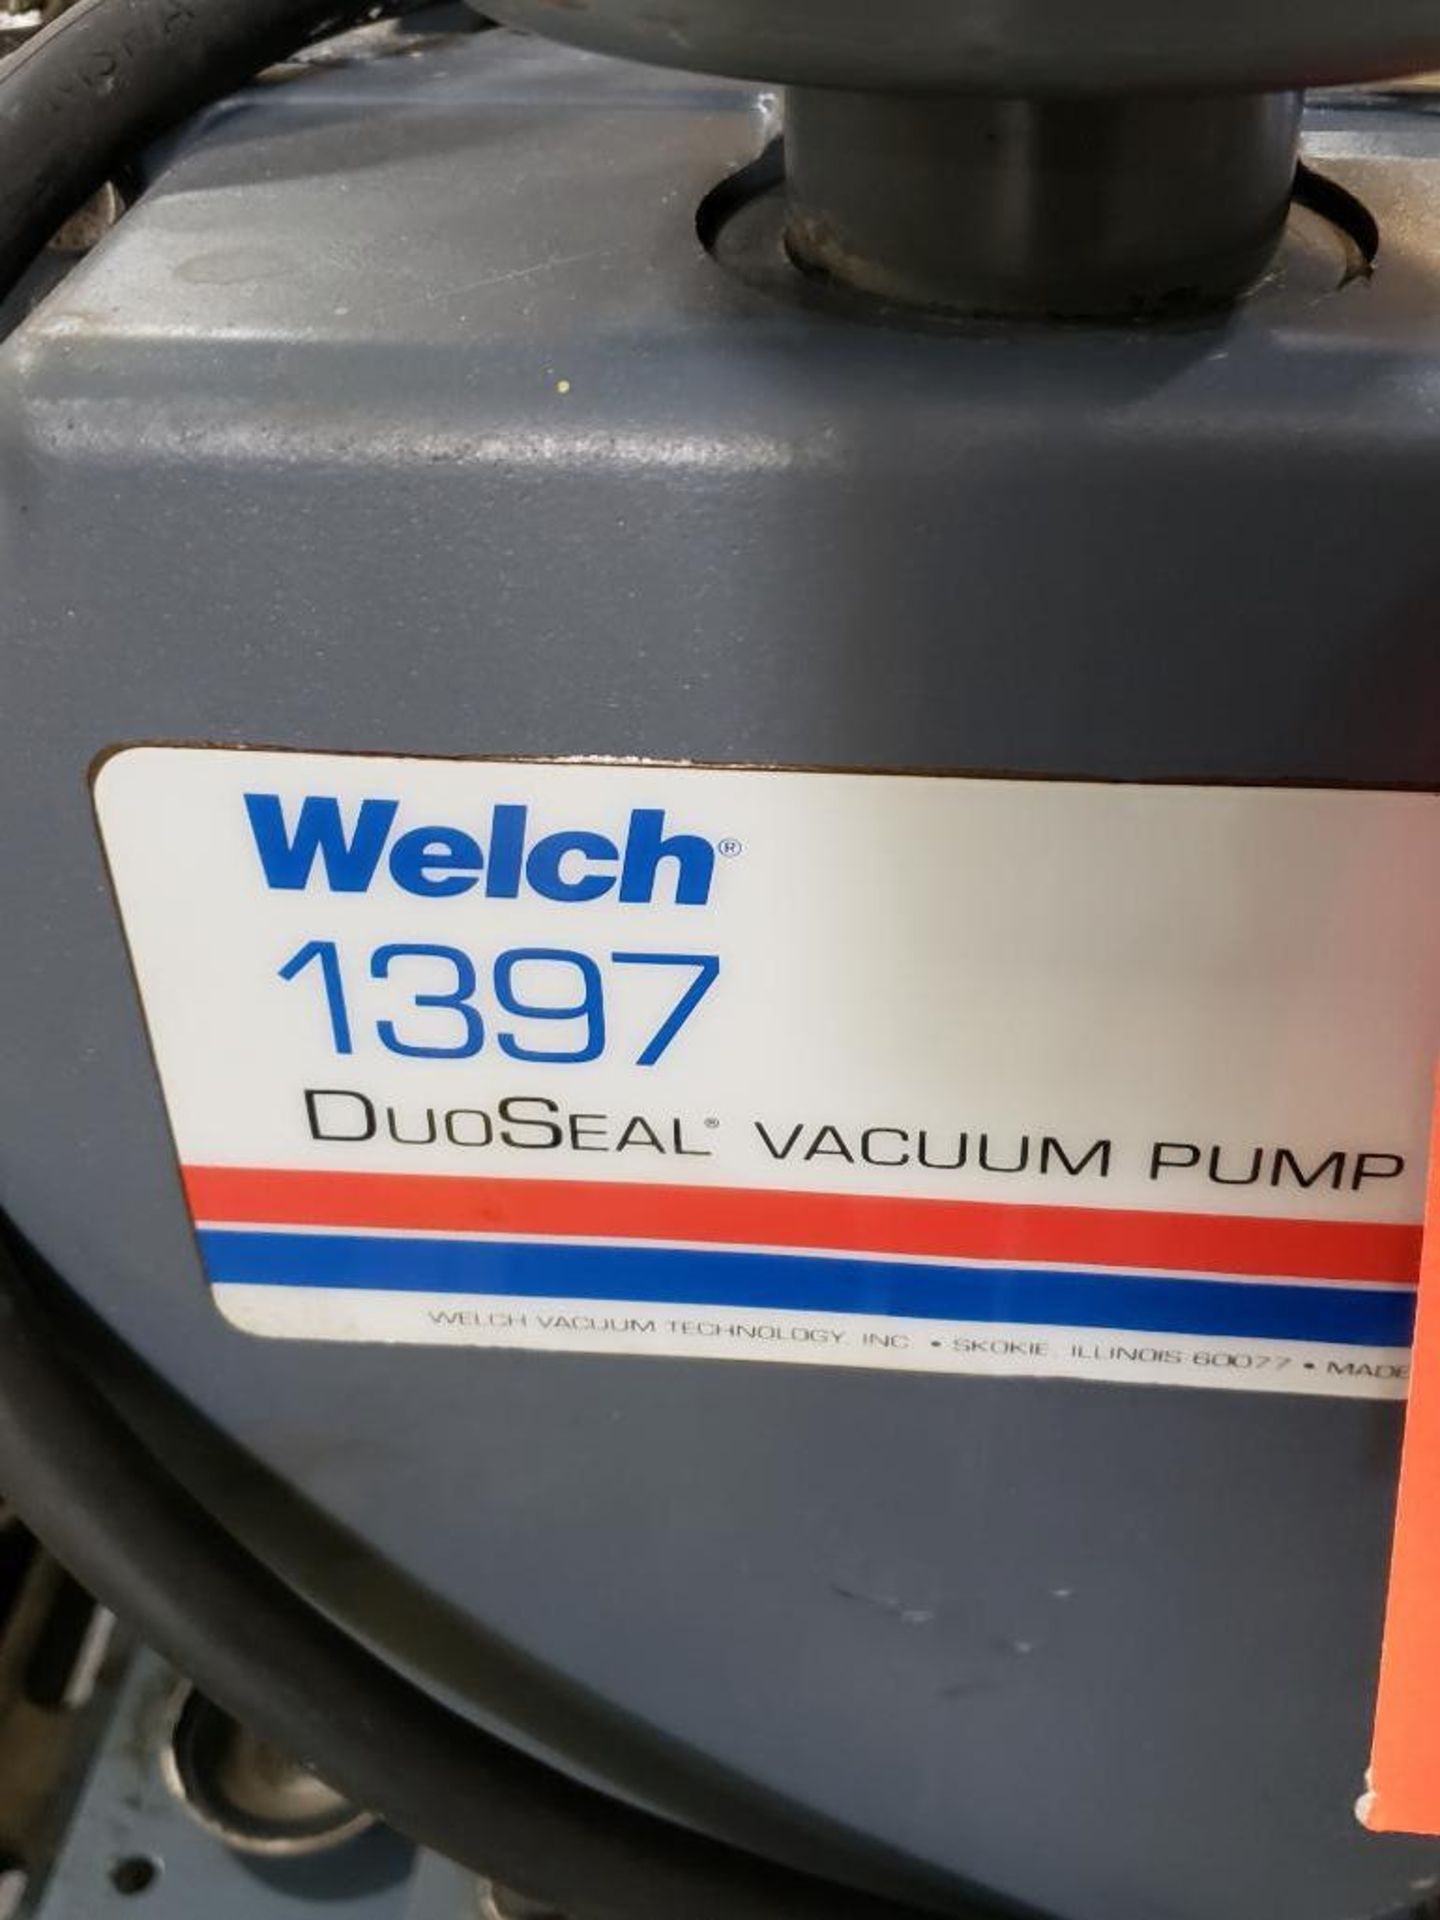 Welch Model 1397 DuoSeal vacuum pump.